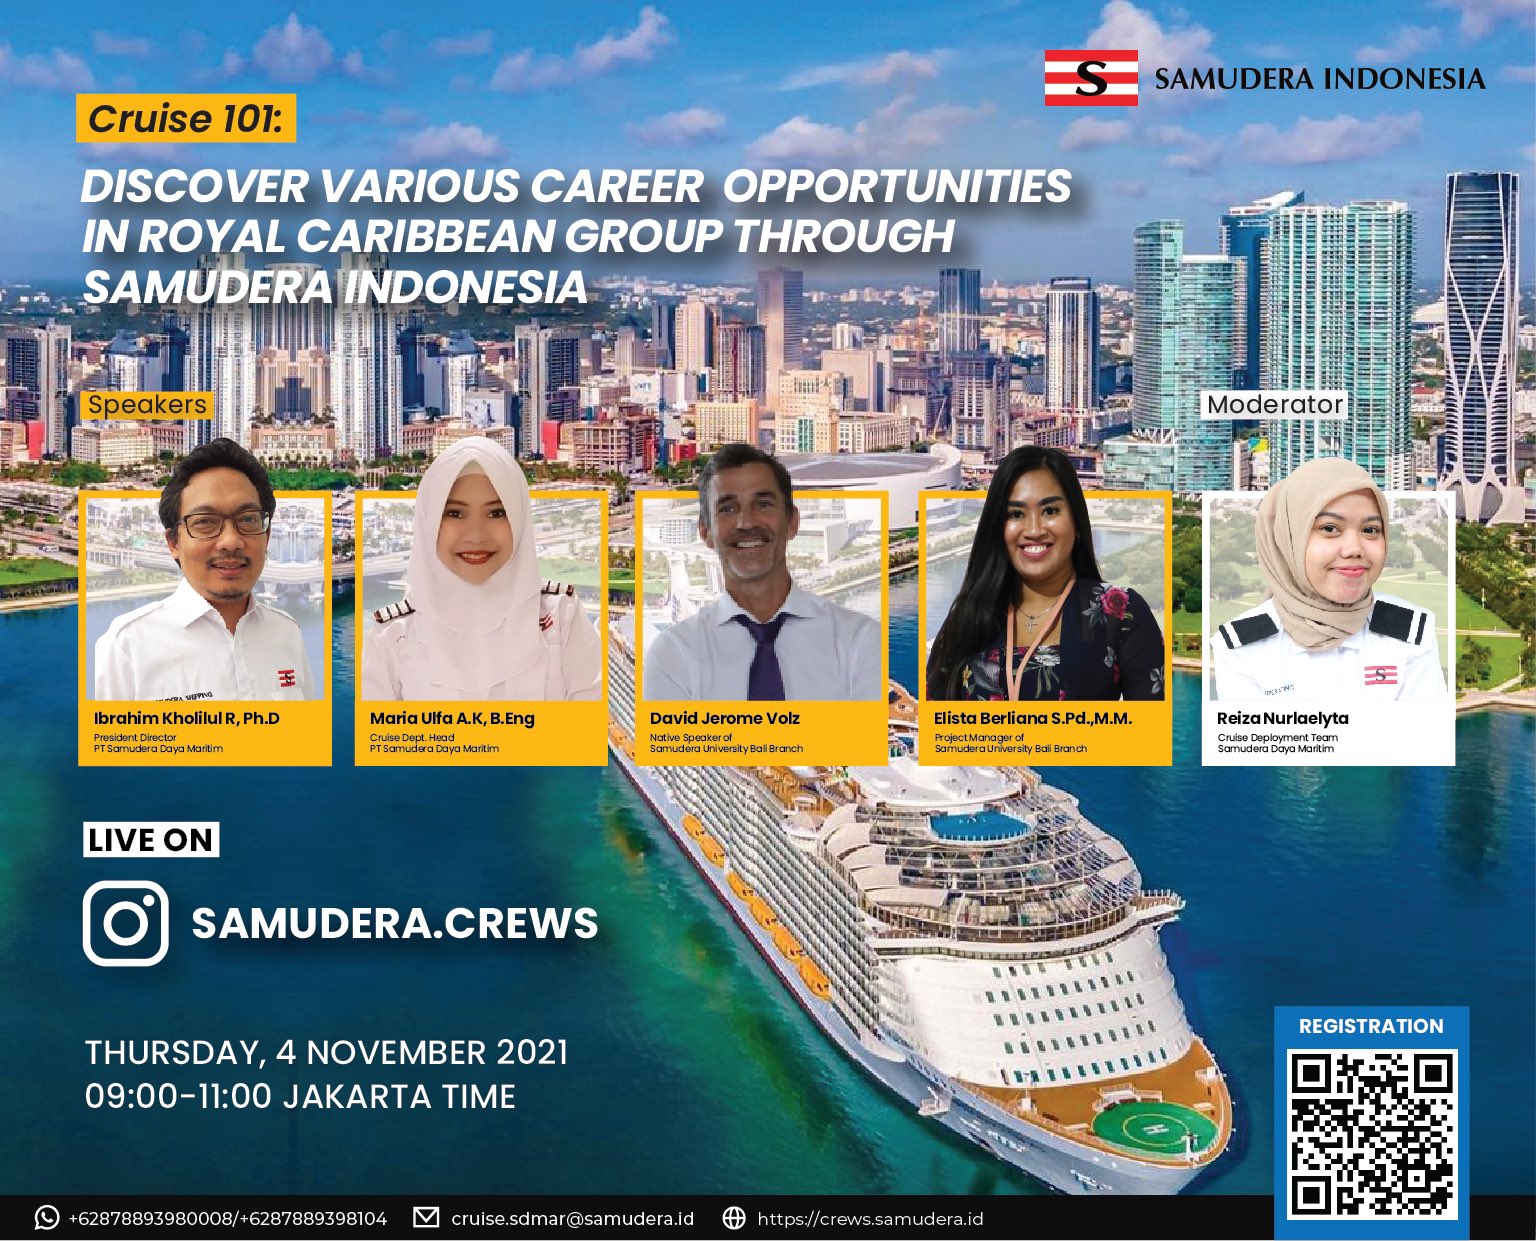 Samudera Indonesia Cruise (@samudera_crews) / Twitter